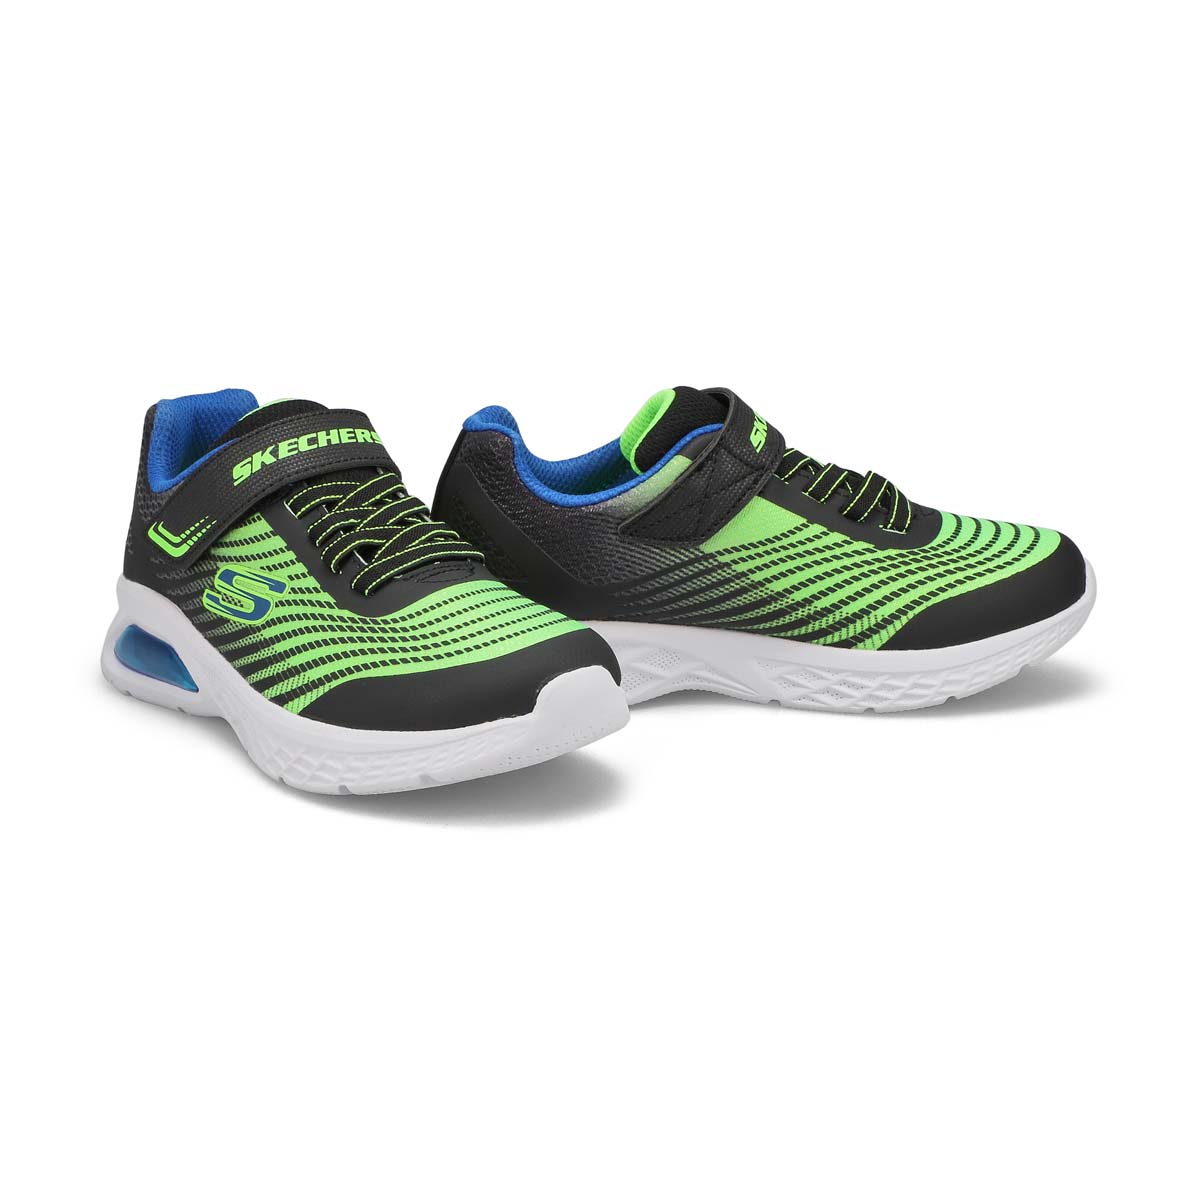 Boys' Microspec Max 2.0 Sneaker - Black/Blue/Lime